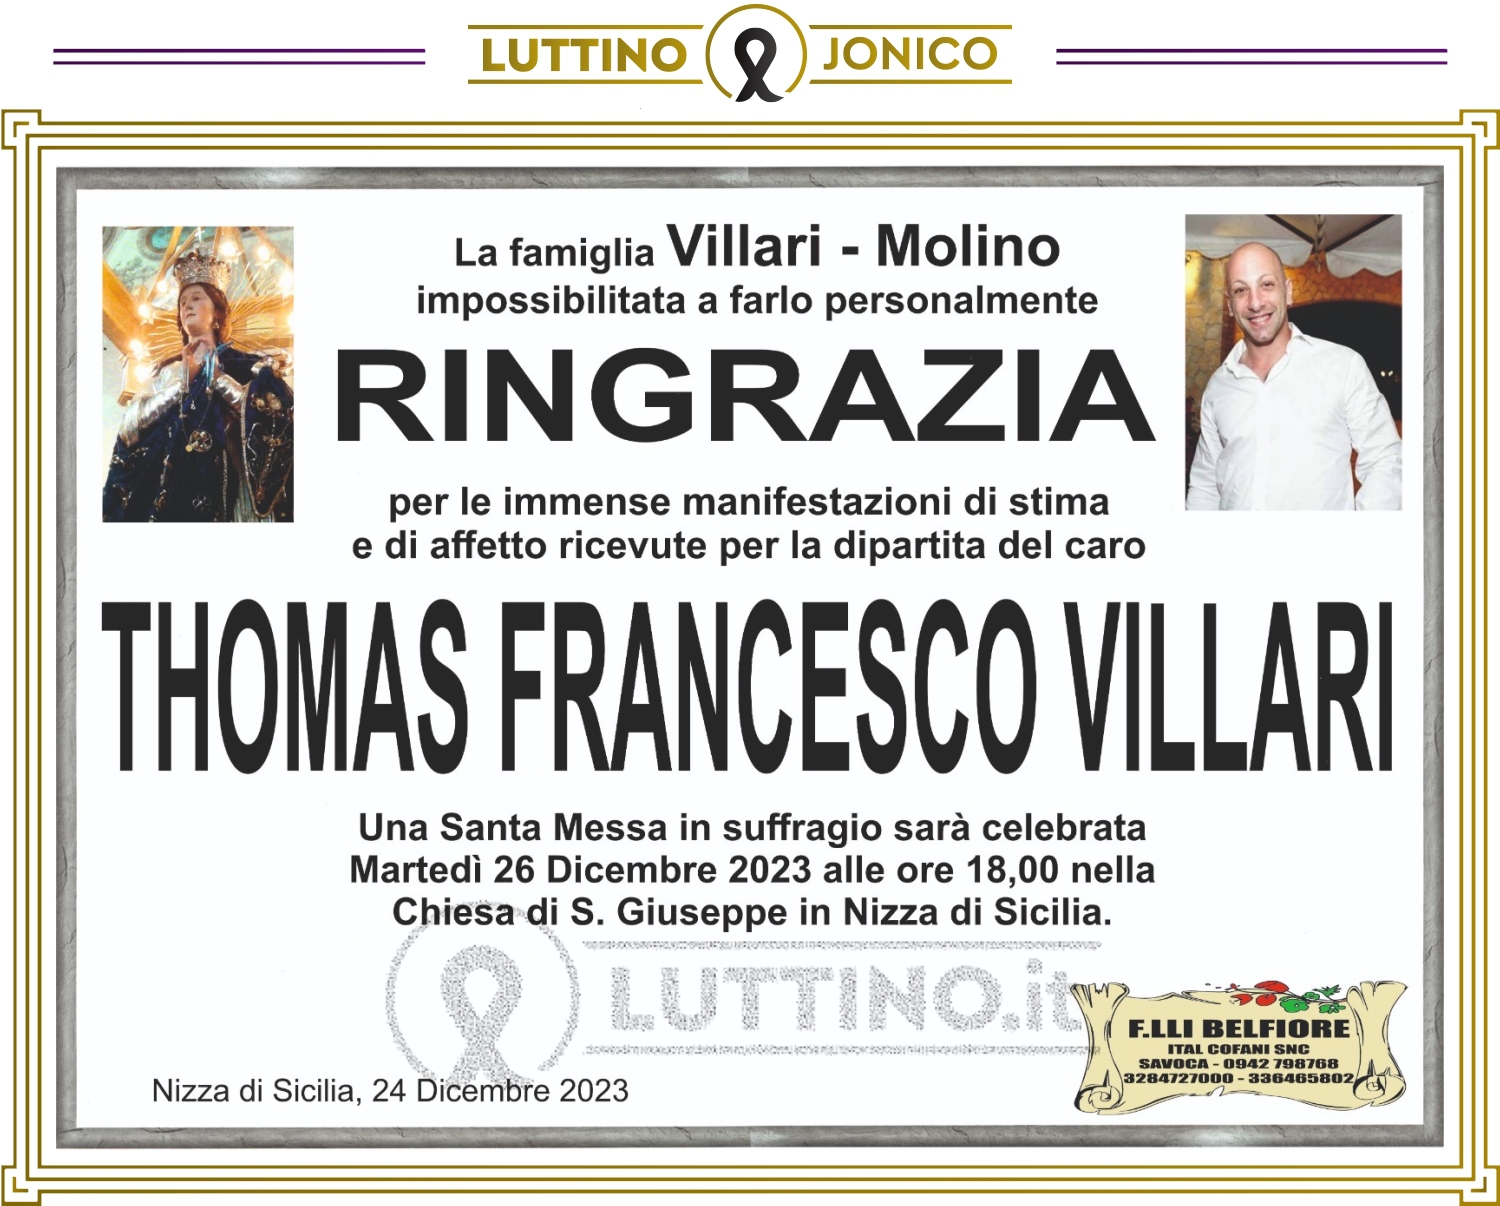 Thomas Francesco Villari